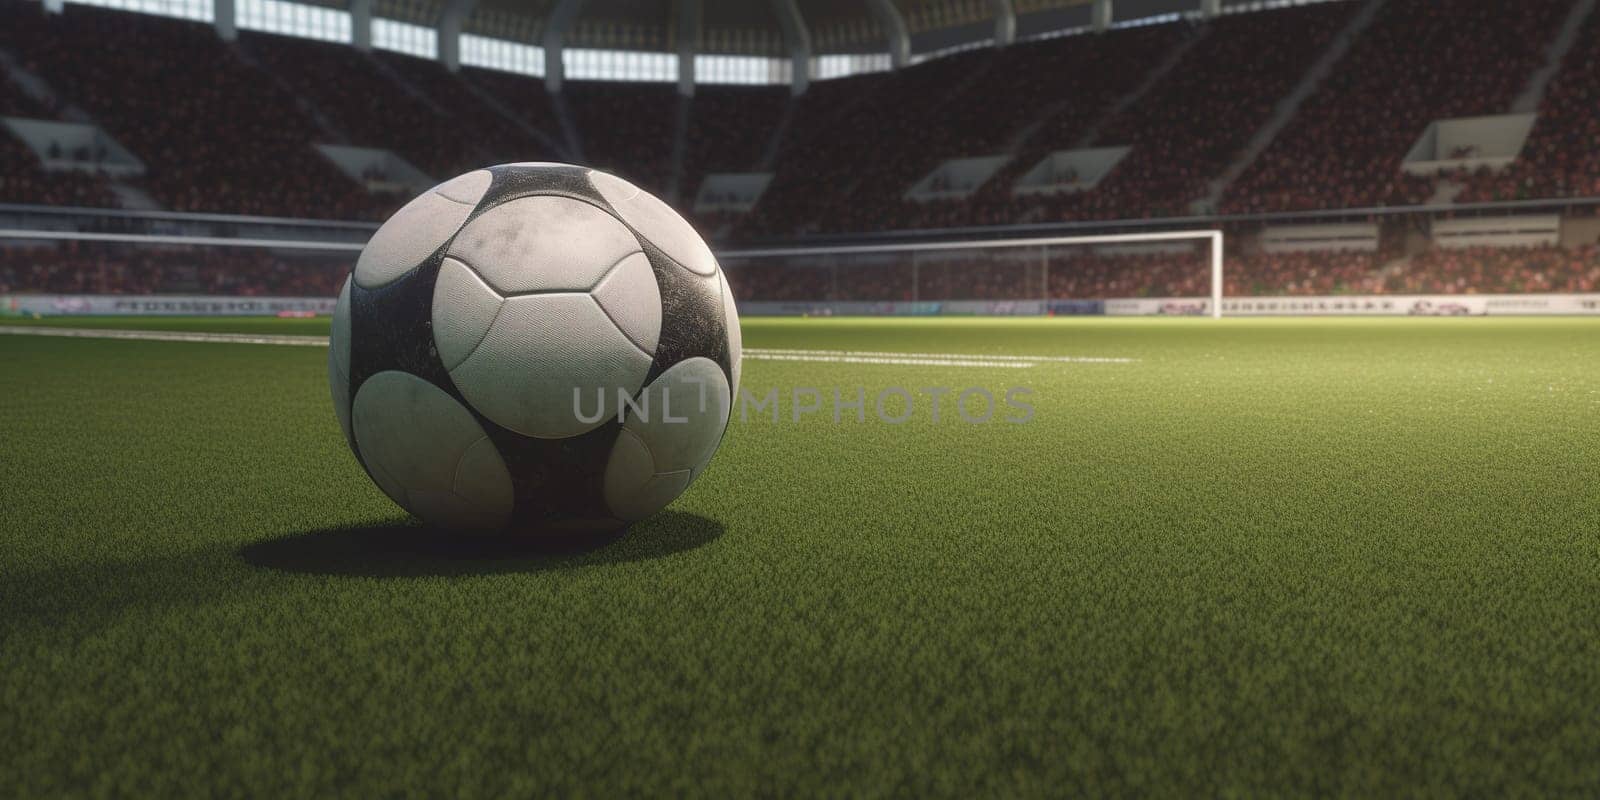 Soccer Ball On A Green Football Field by tan4ikk1